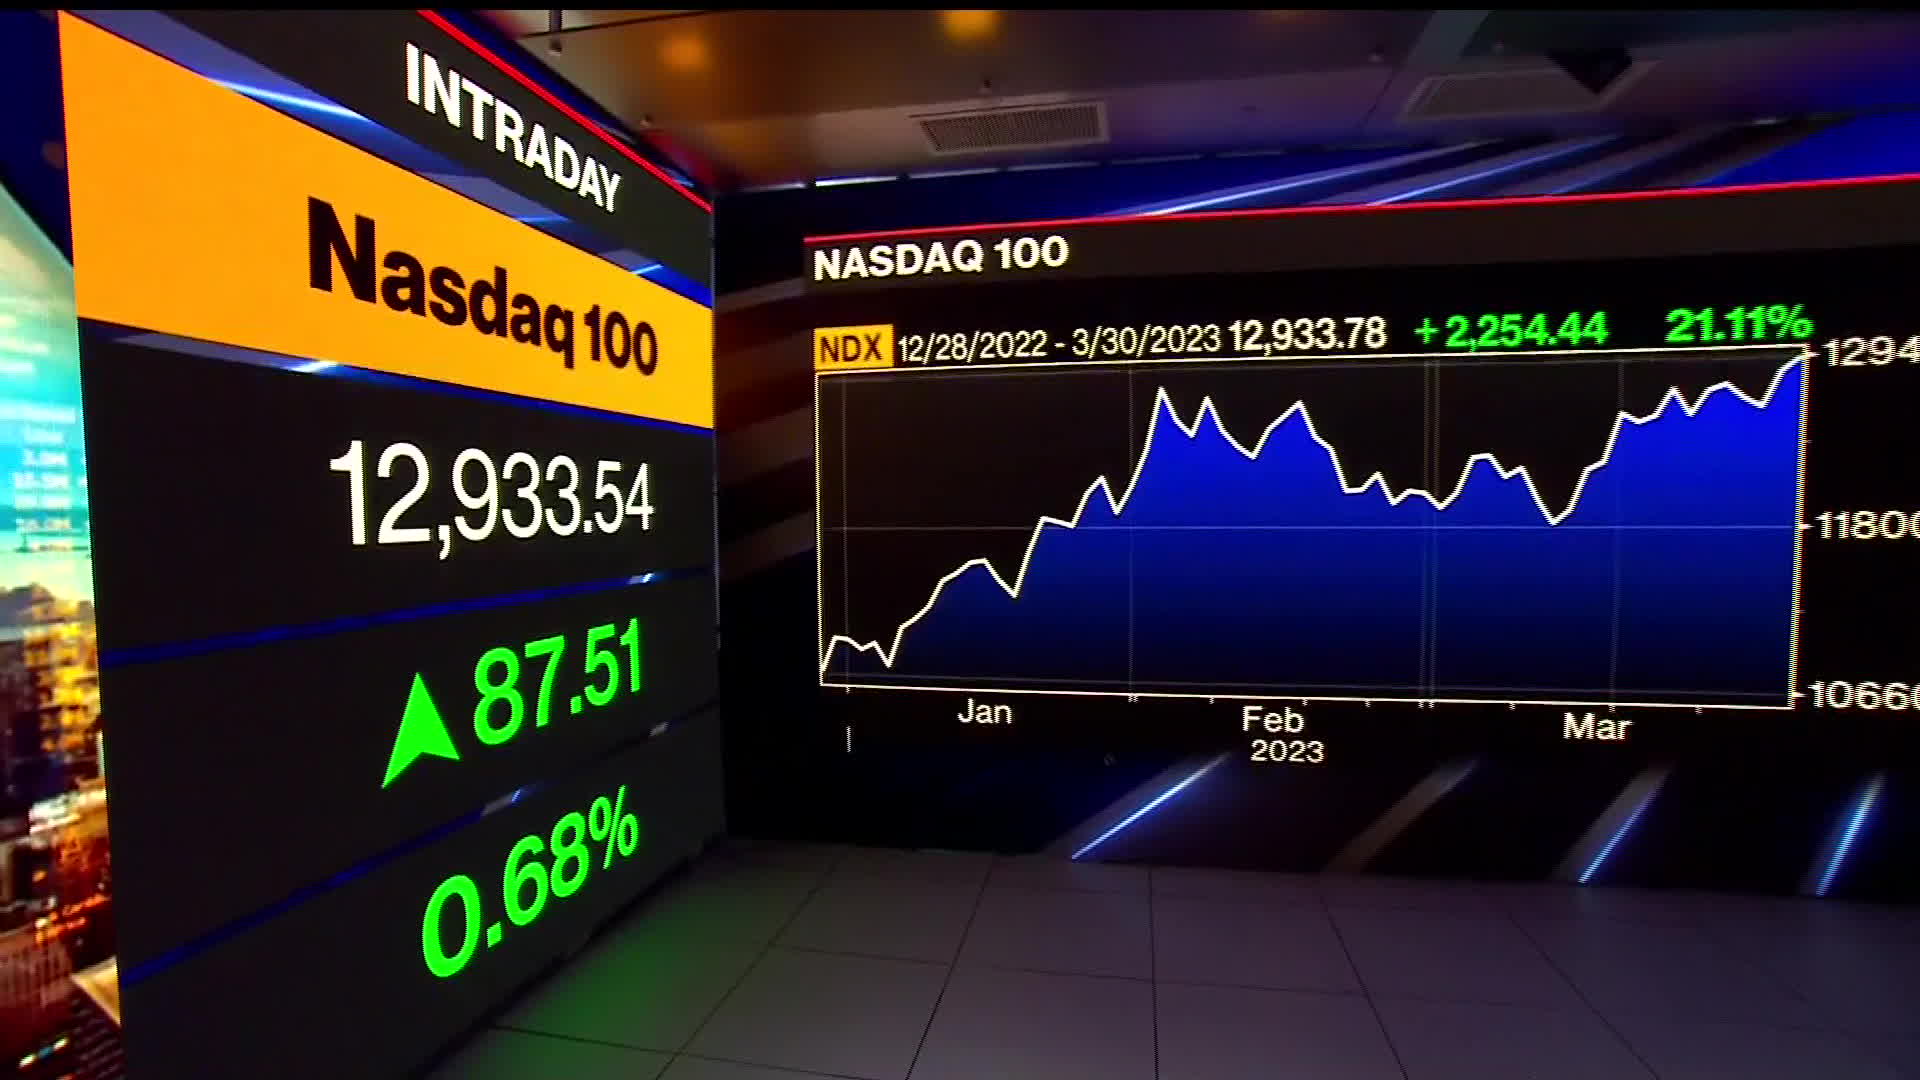 Nasdaq 100 (NDX) Enters Bull Market as Bank Jitters Ease, Tech